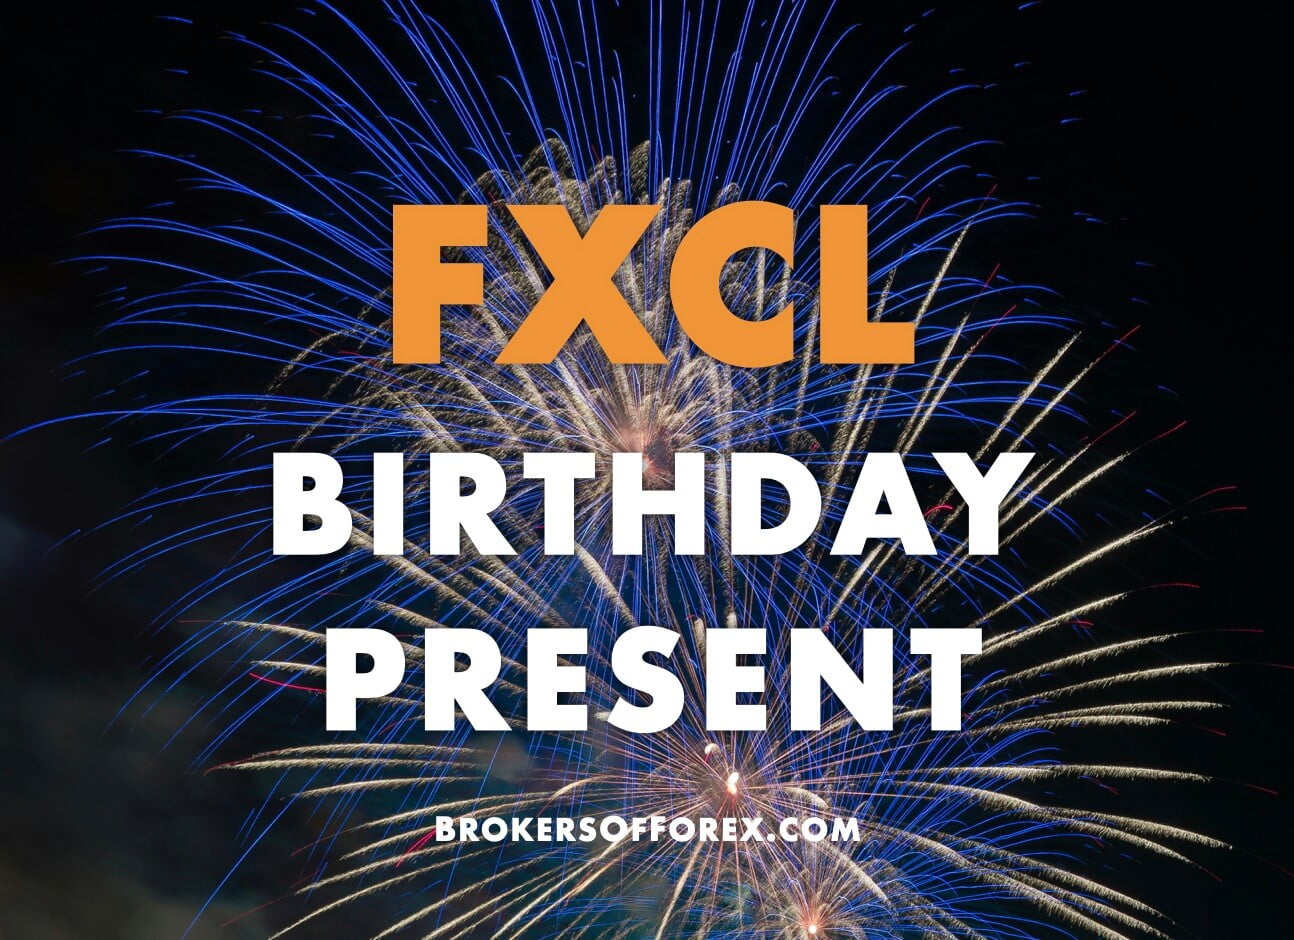 FXCL Birthday Present